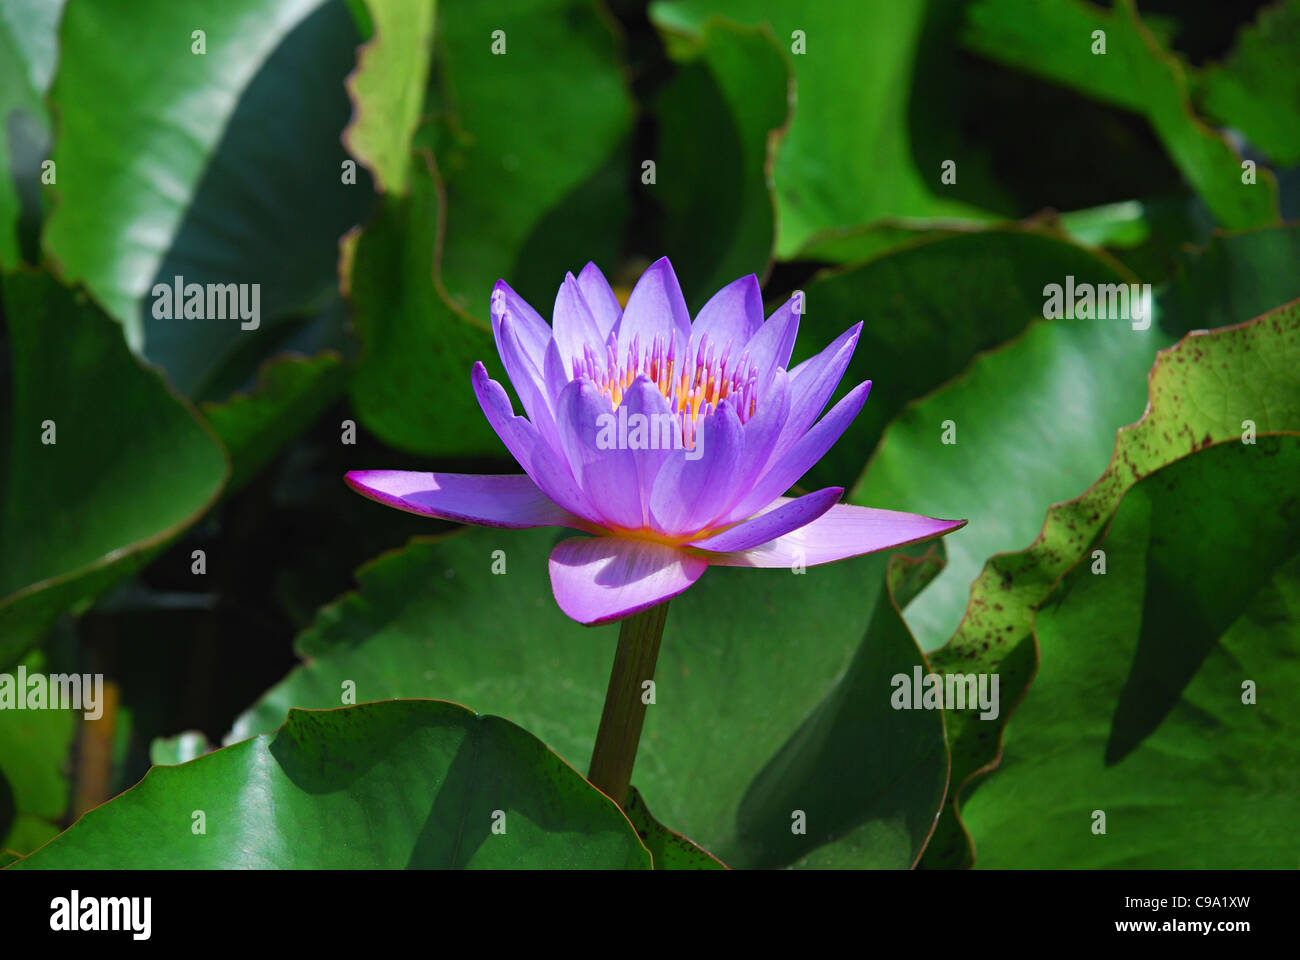 Lila Lotus, Heilige Lotus Nelumbo Nucifera Familie: Nelumbonaceae. Lotus ist die nationale Blume von Indien, Pune City, Bundesstaat Maharashtra, Indien. Stockfoto